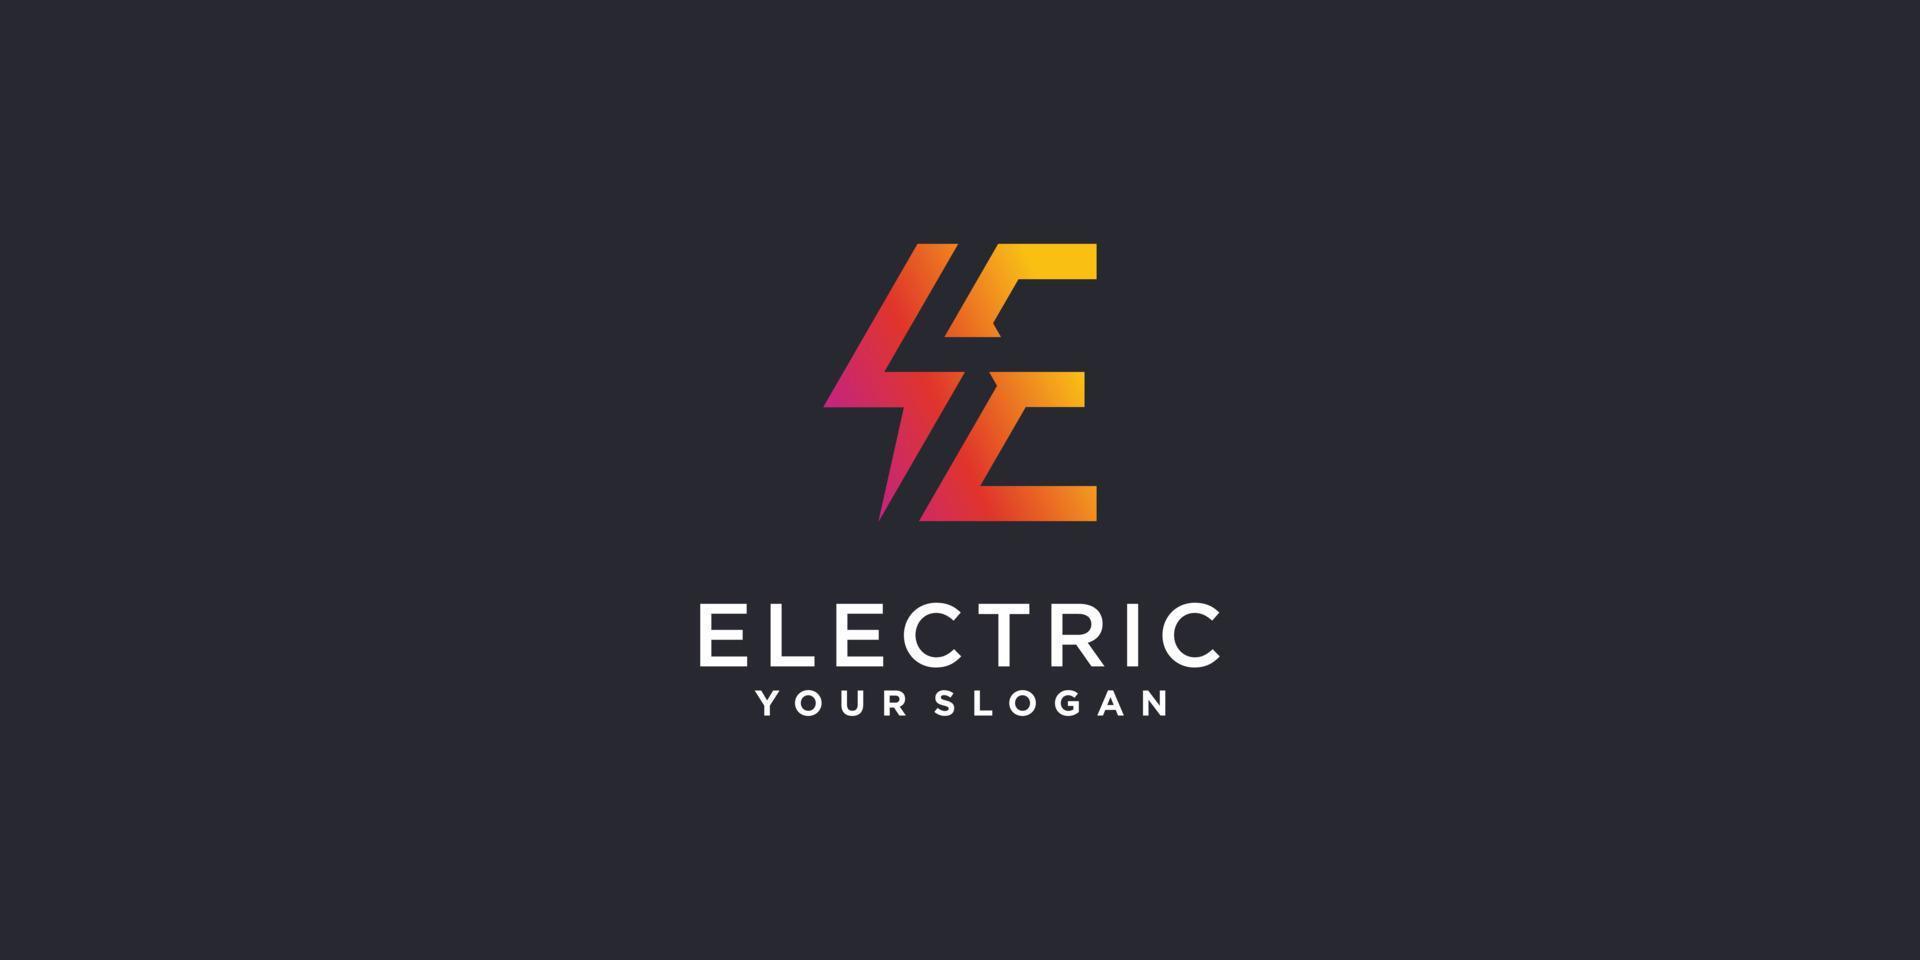 Letter E logo with electric concept Premium Vector